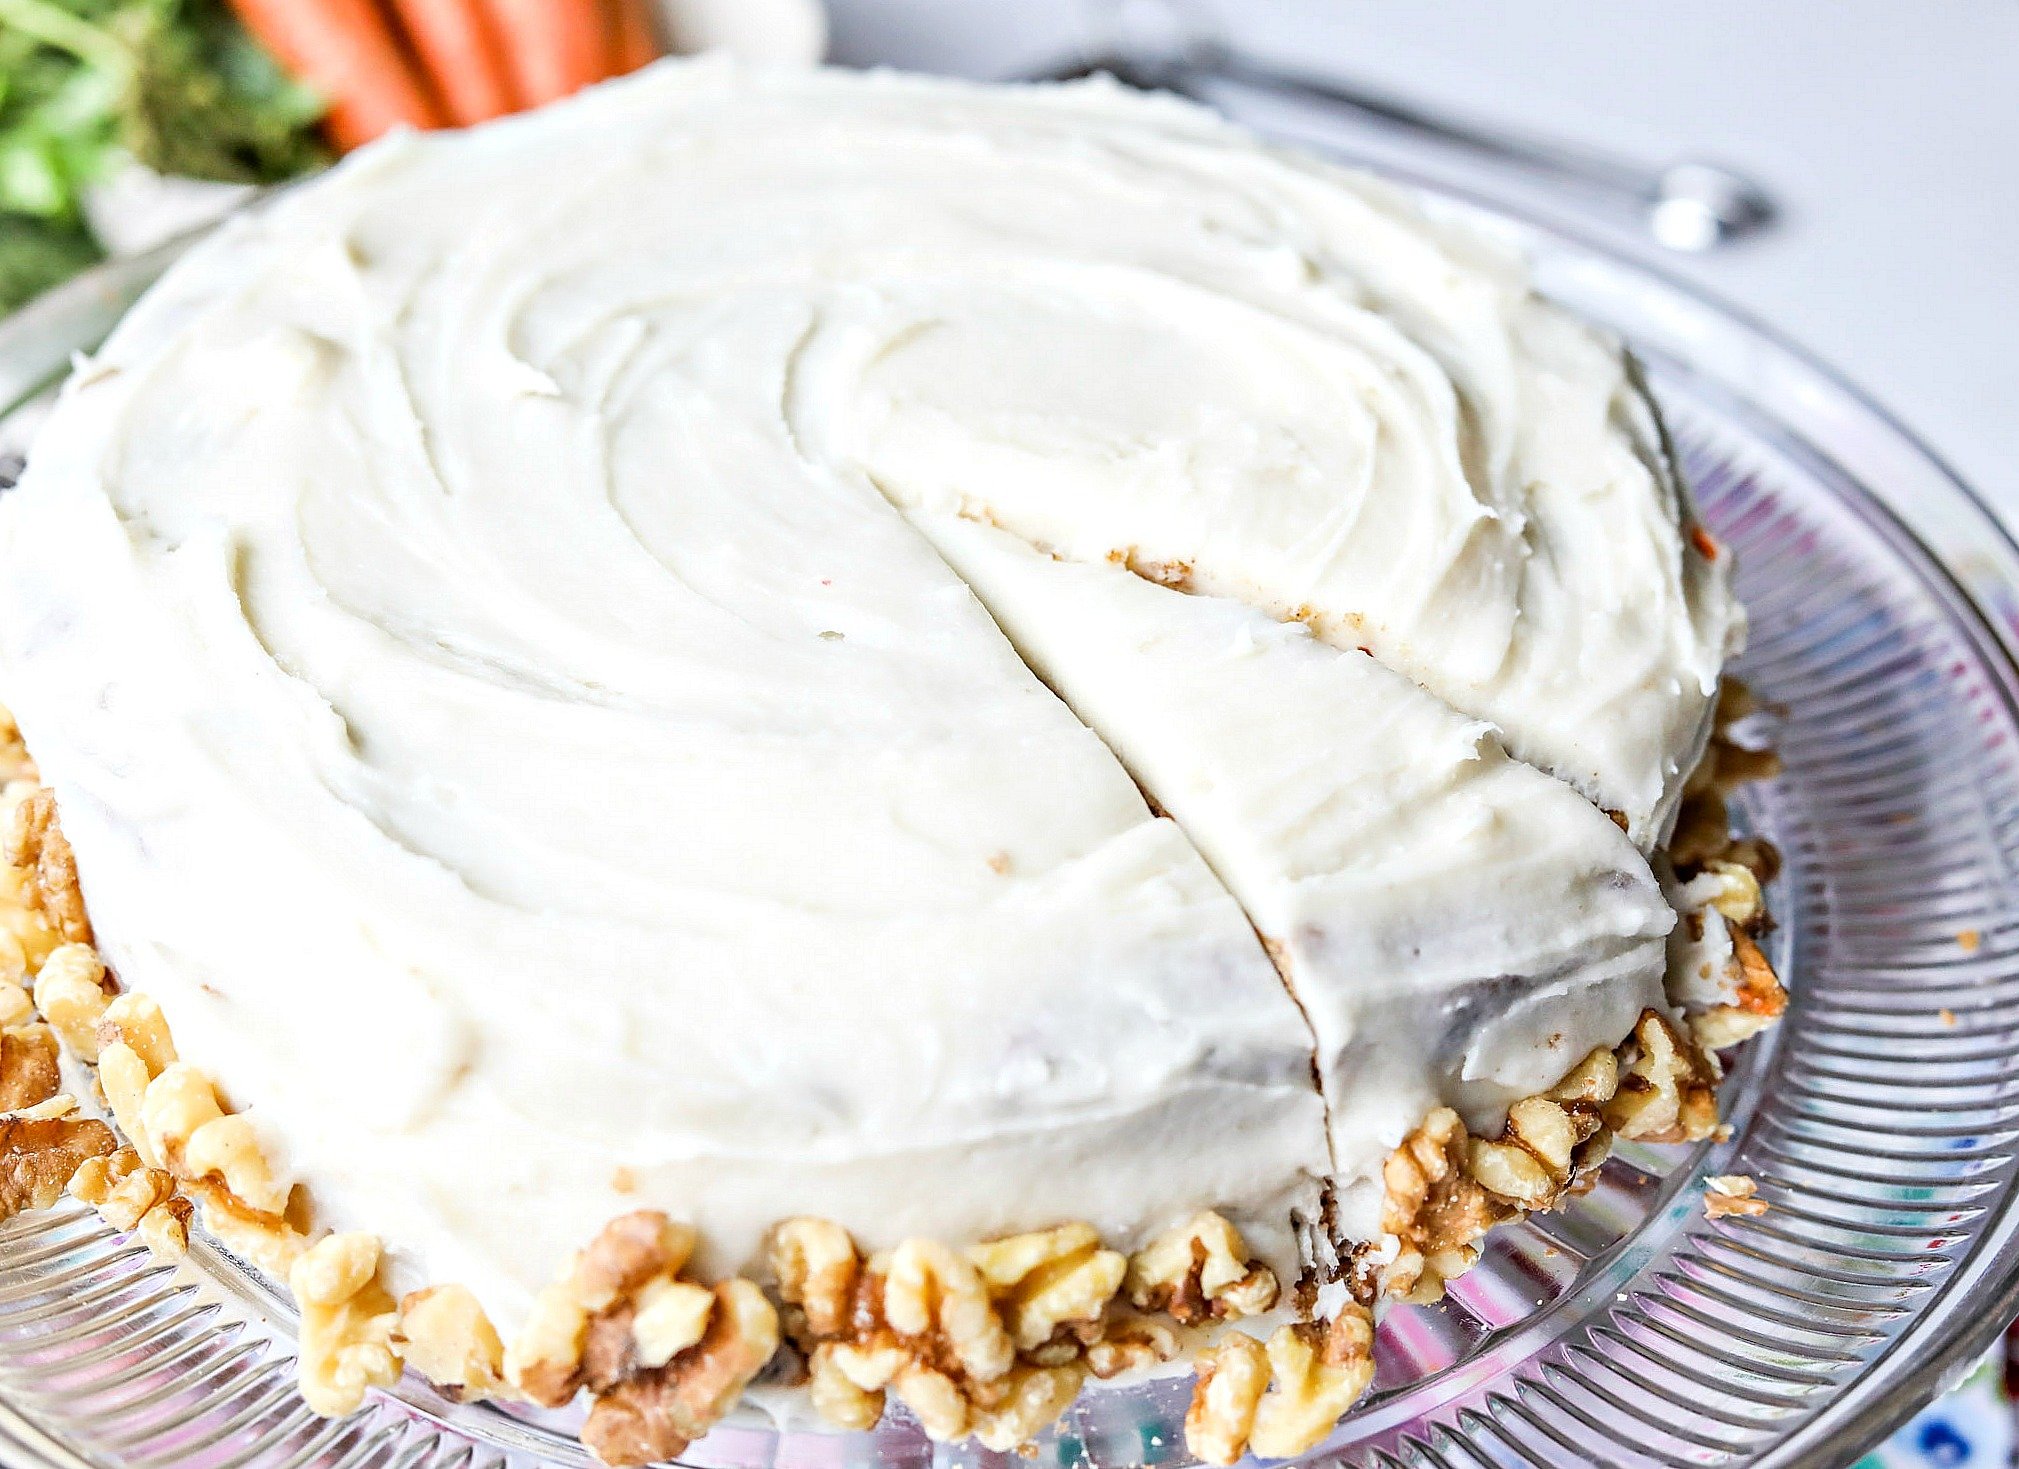 The Best Vegan Carrot Cake (Gluten Free & No Sugar)